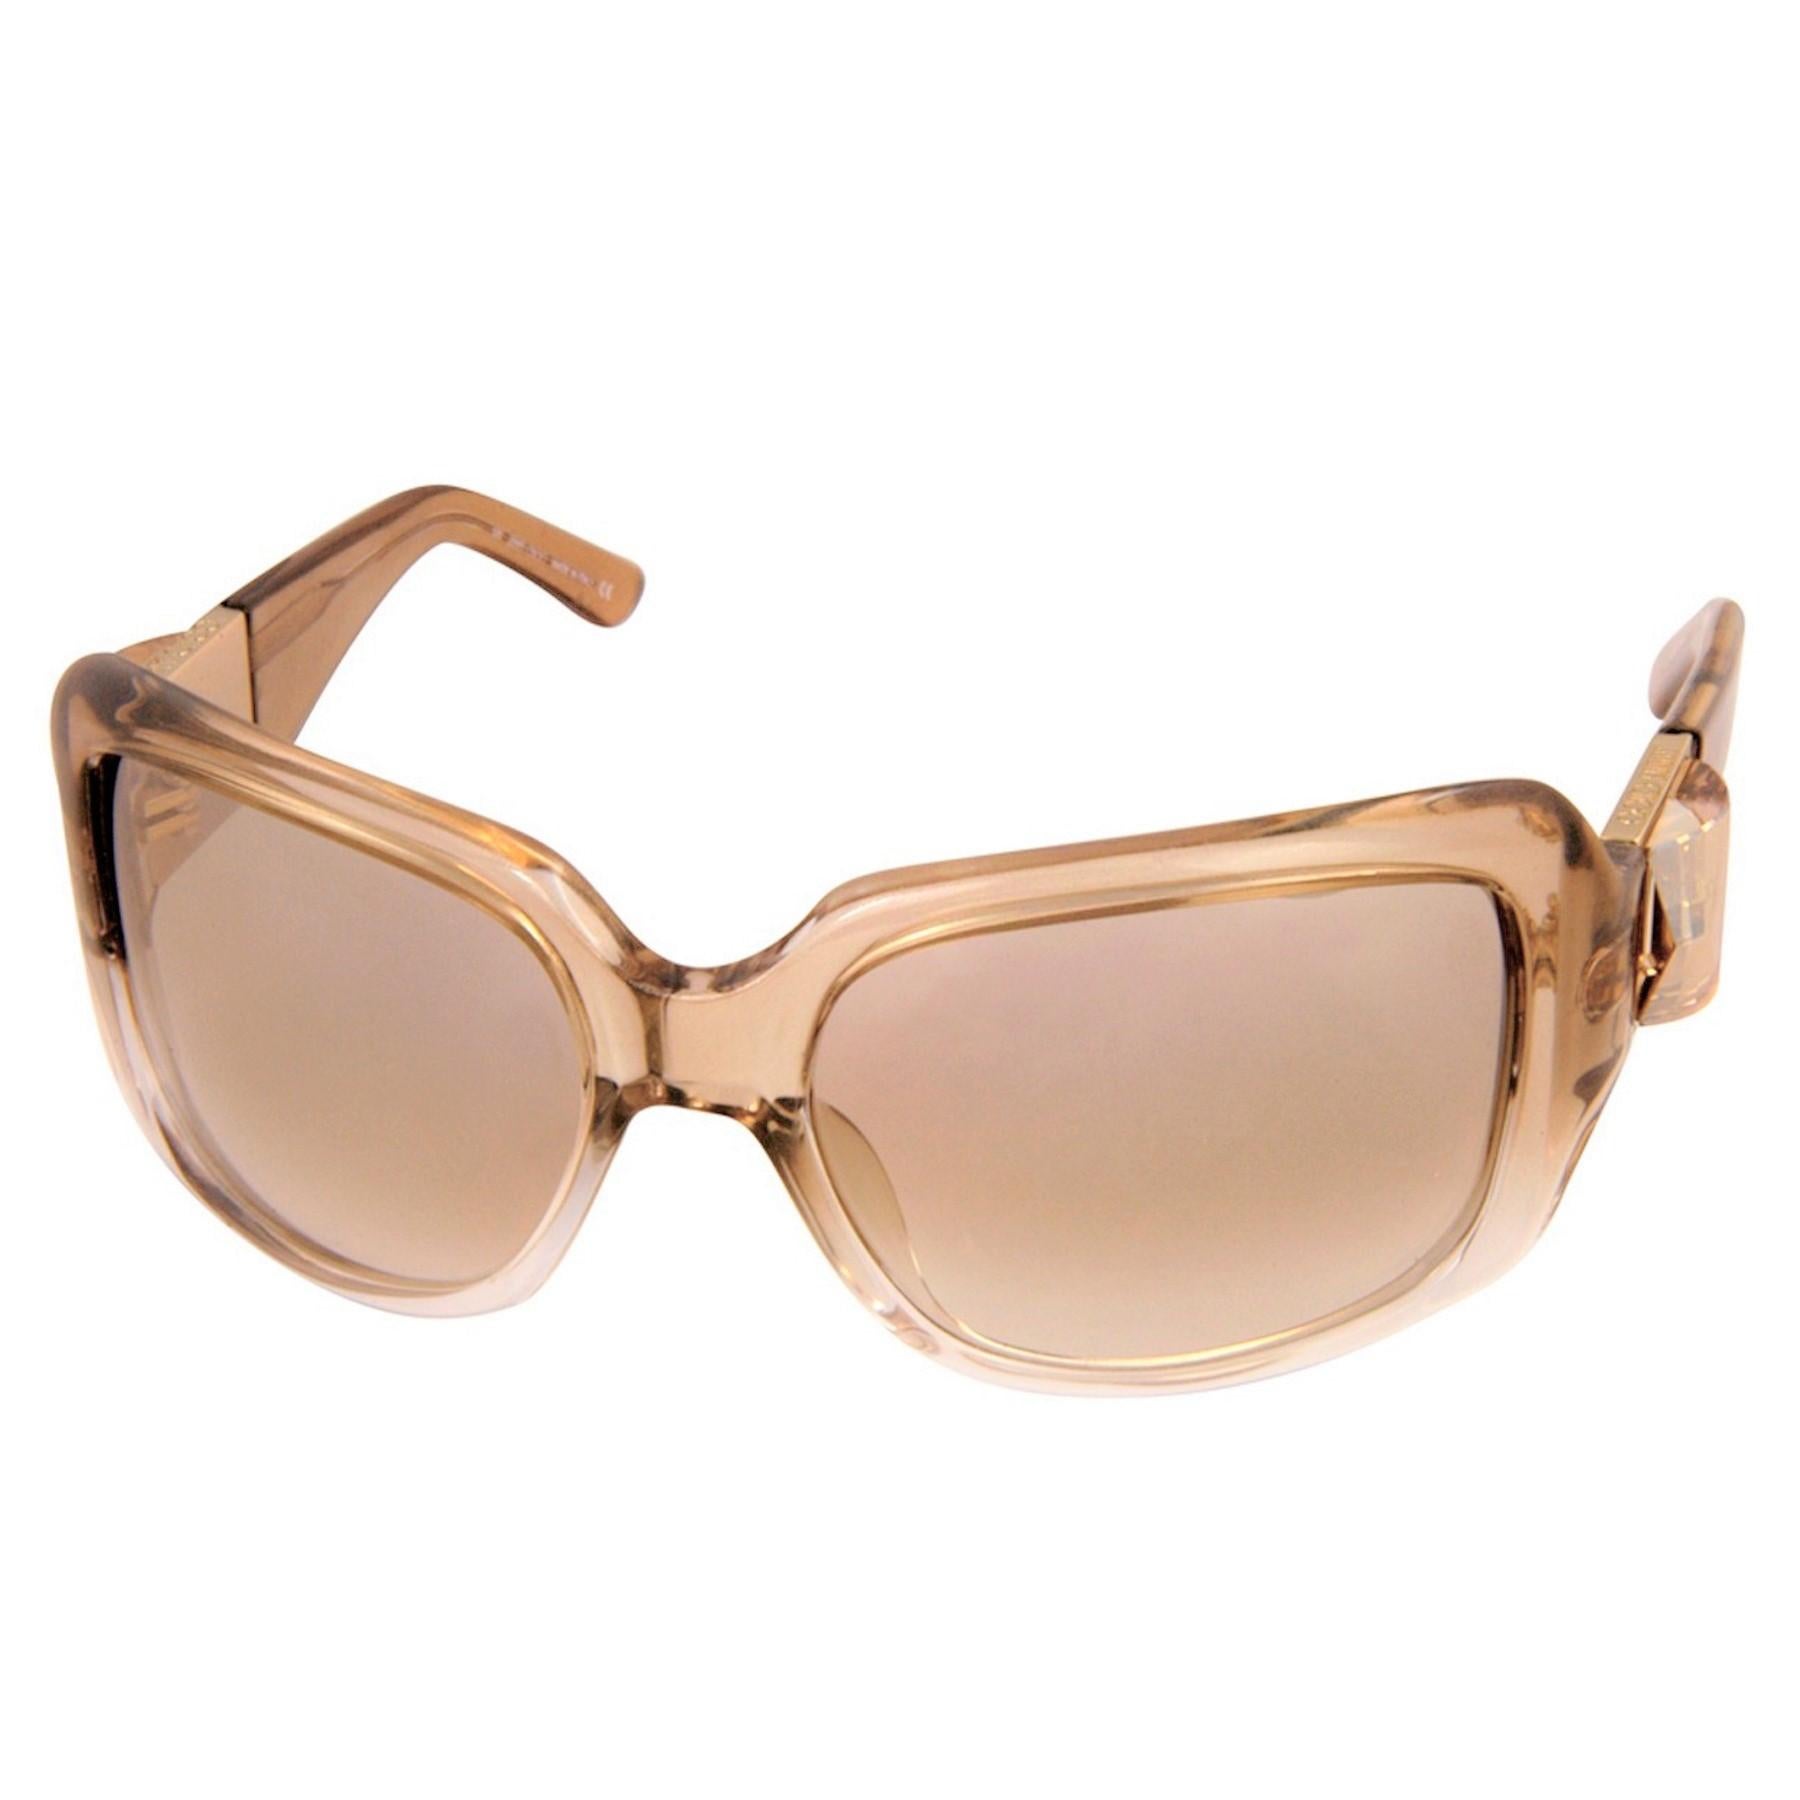 Women's New Jimmy Choo Swarovski Sunglasses With Case & Box 